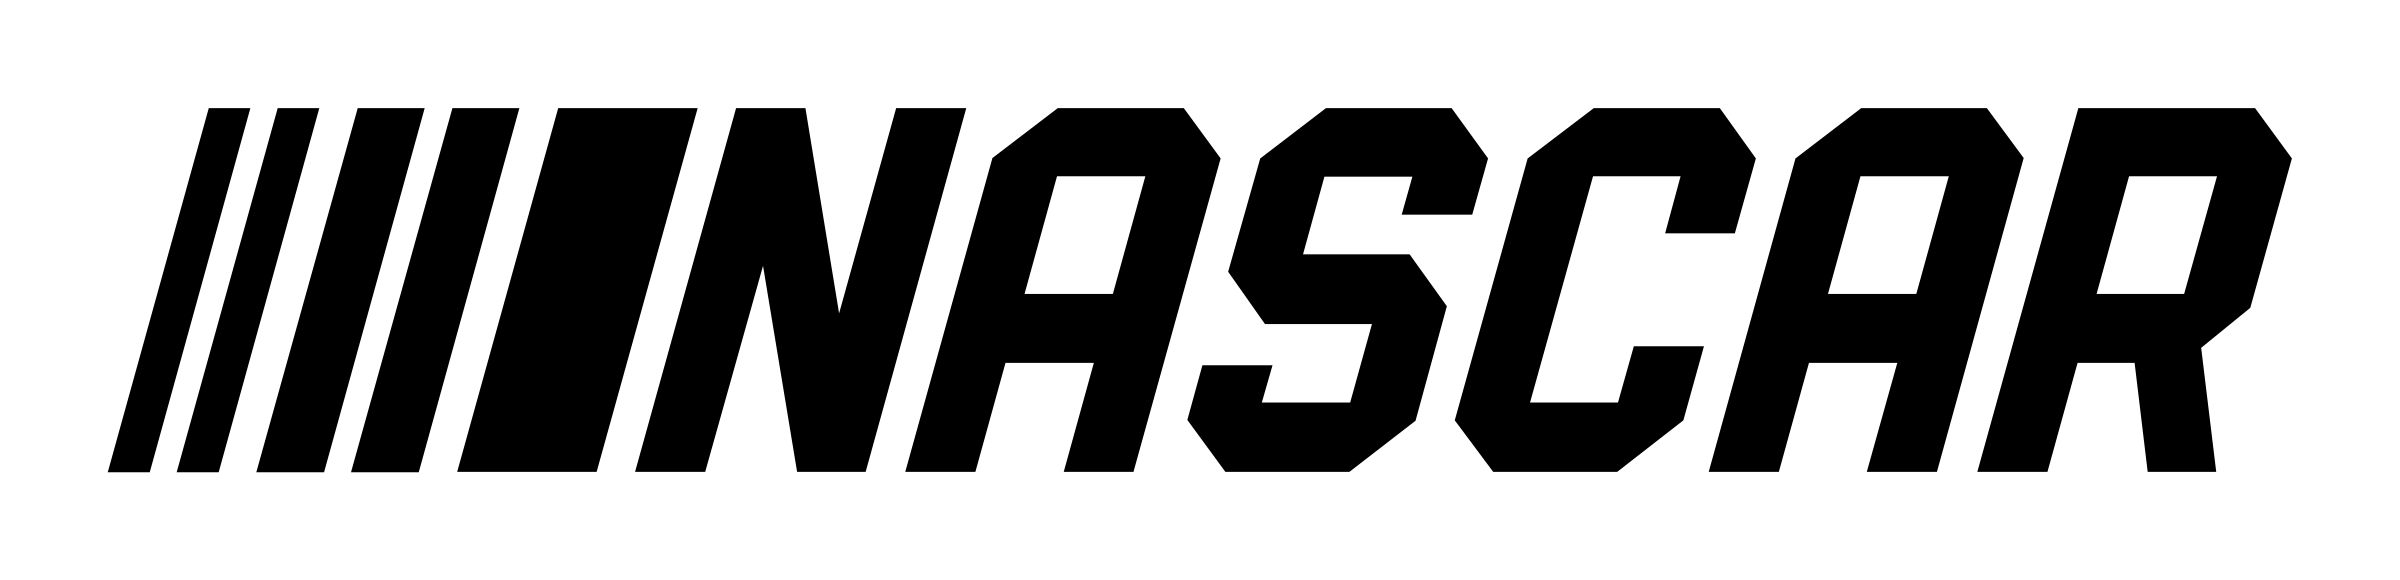 Nascar Logo Transparent Background